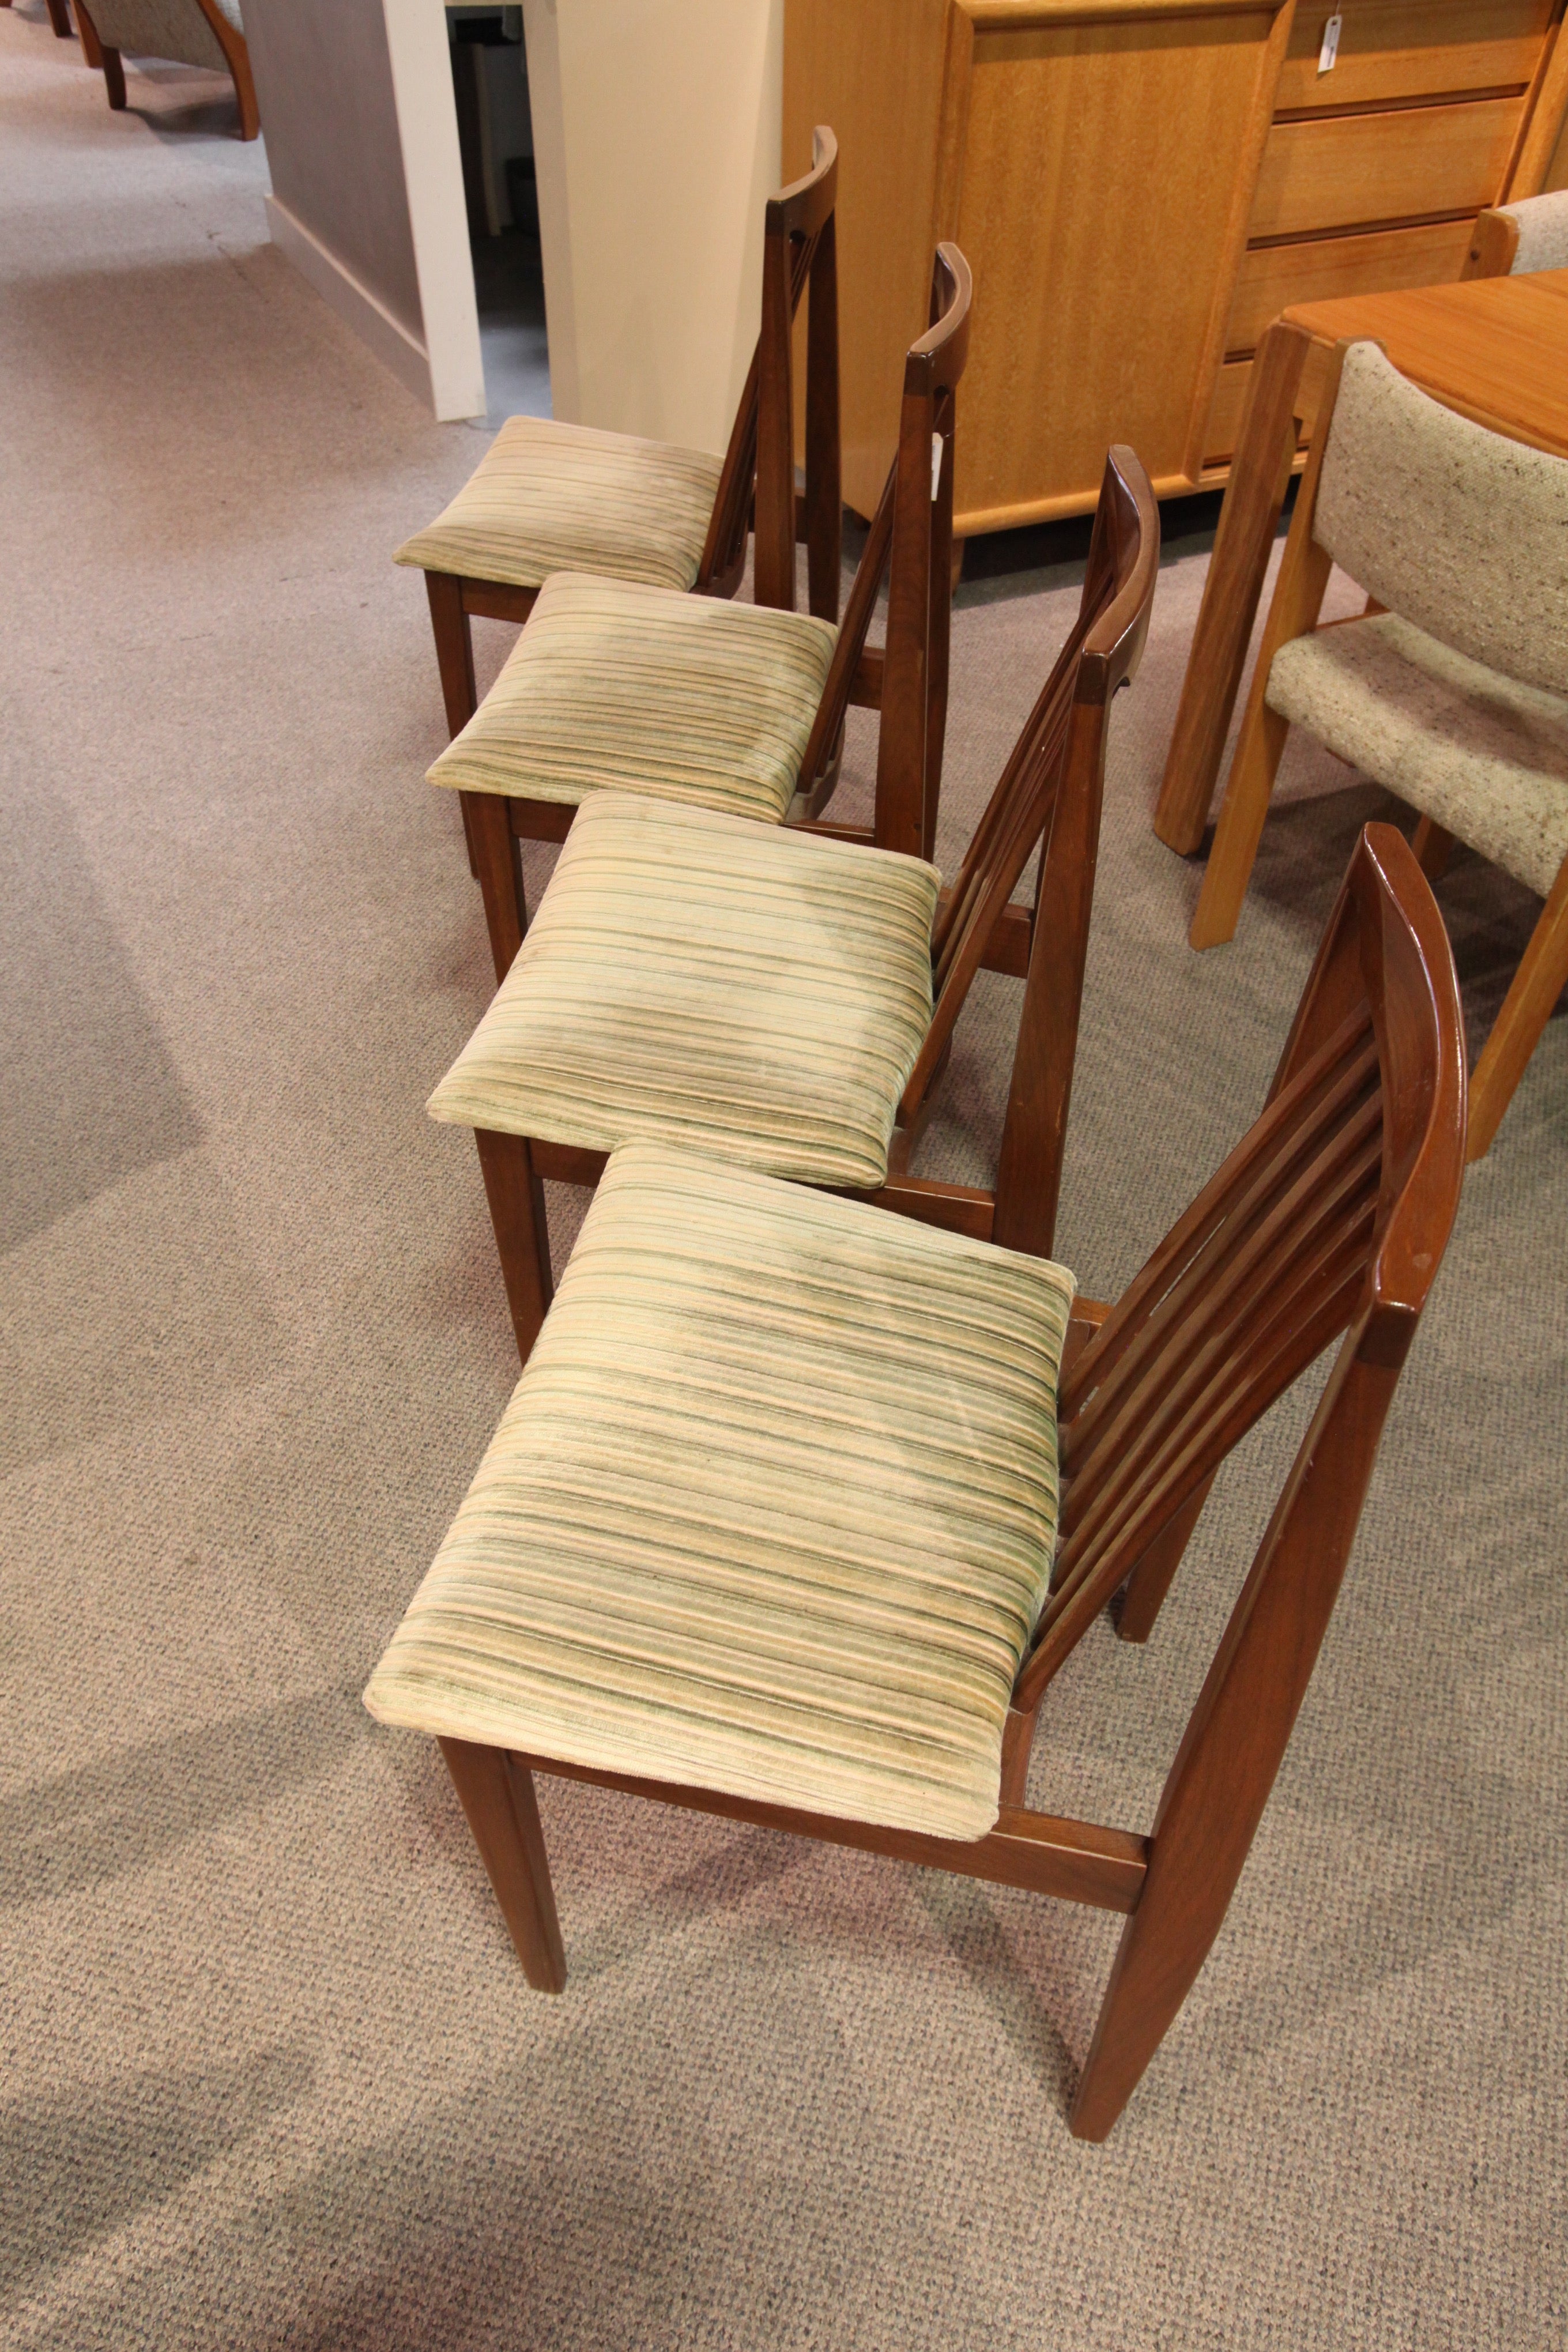 Set of 4 Honderich Walnut chairs (1960)